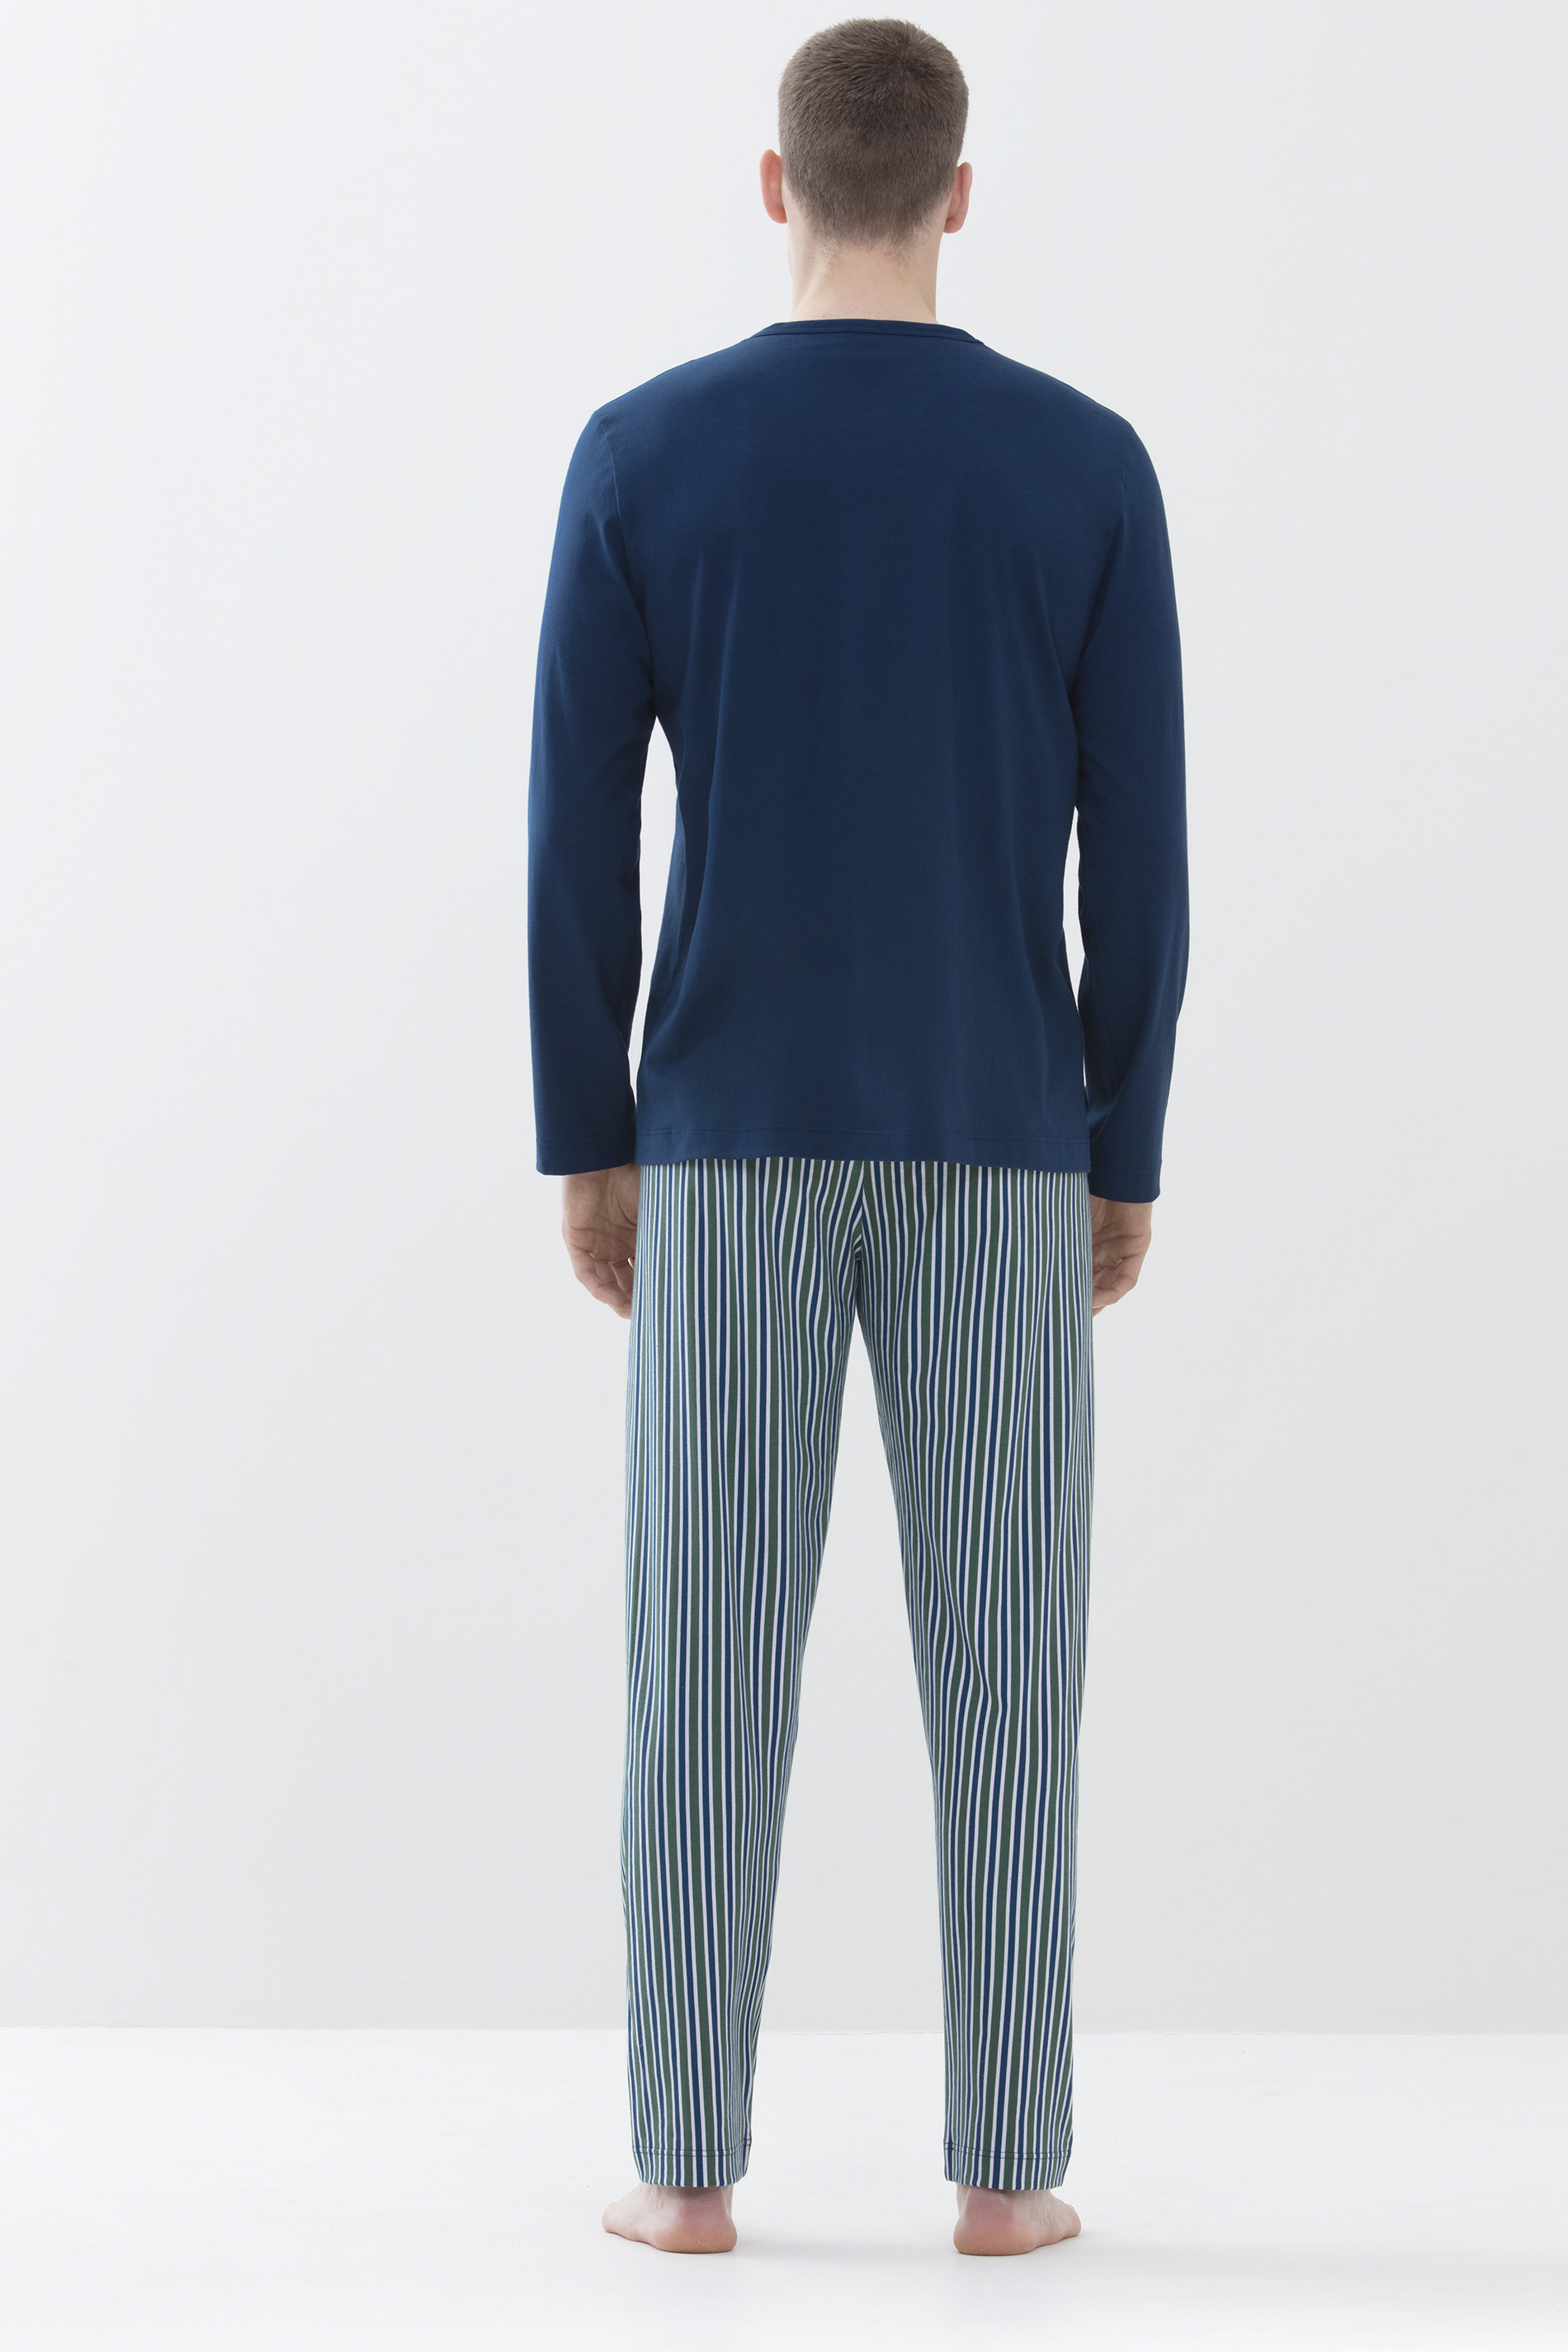 Pyjama Neptune Serie 3 Col Stripes Achteraanzicht | mey®